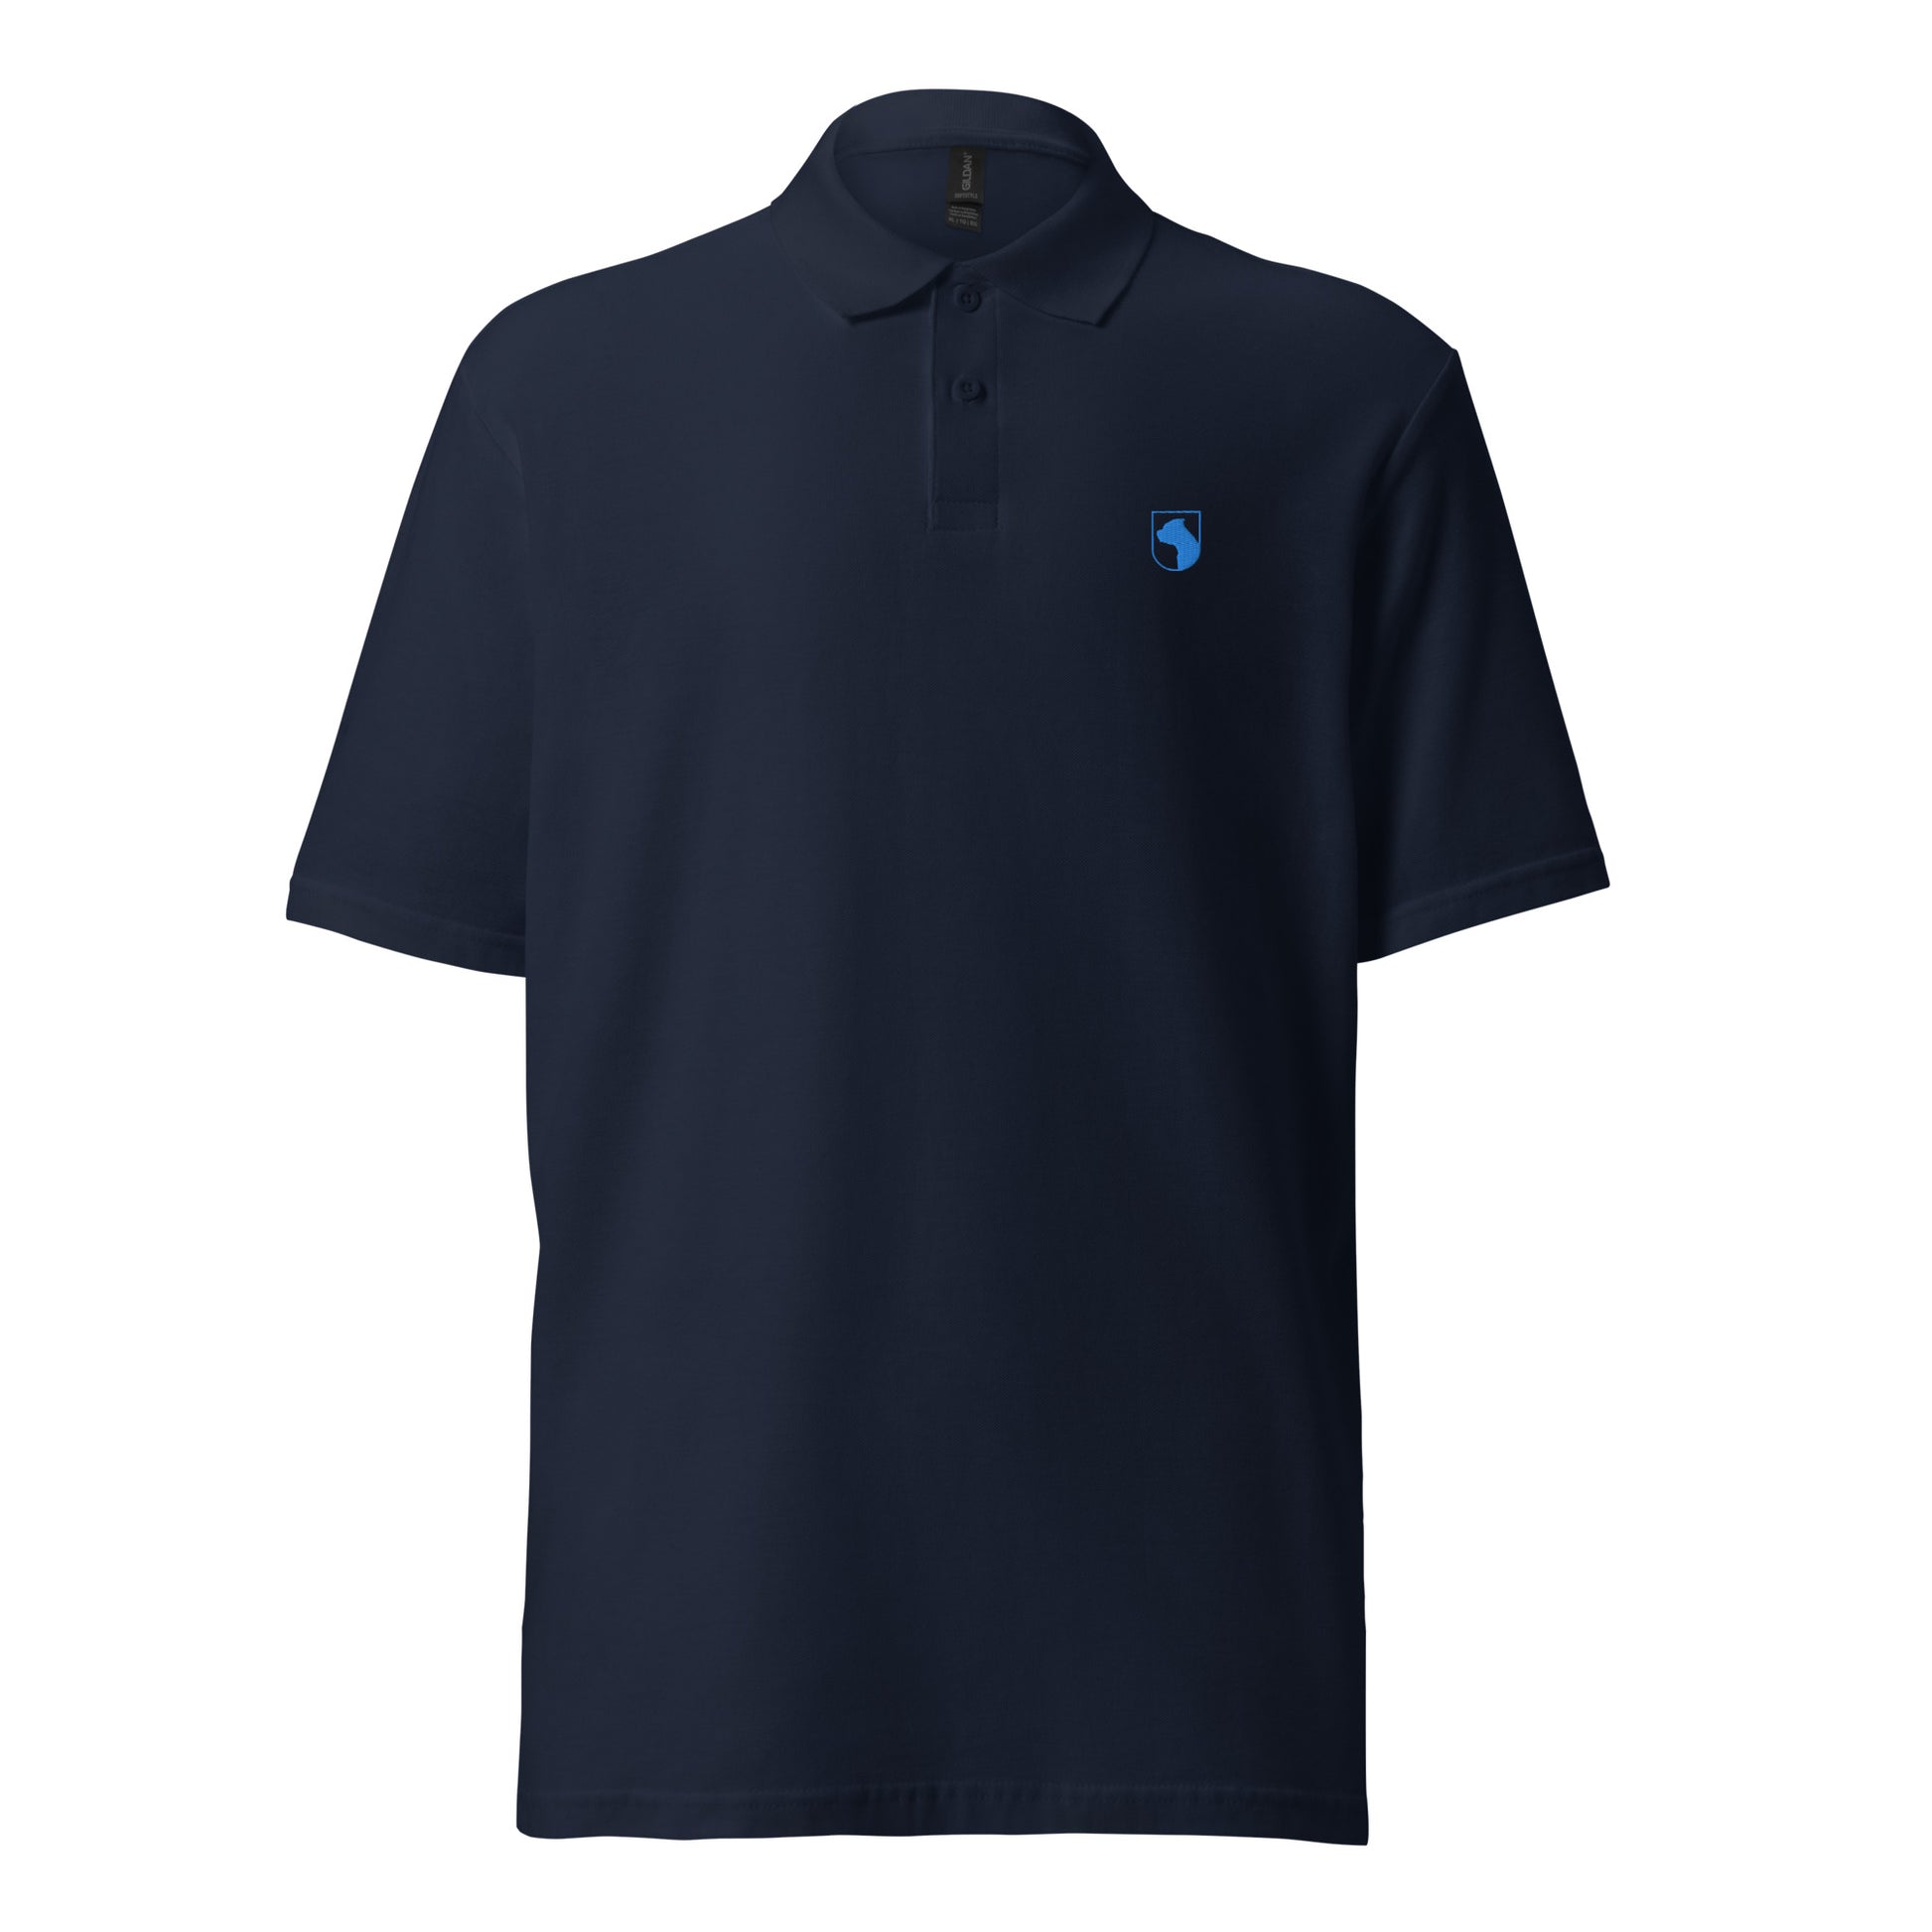 "STAFF Logo" Unisex Piqué-Poloshirt - Staffordshire Bullterrier - blau